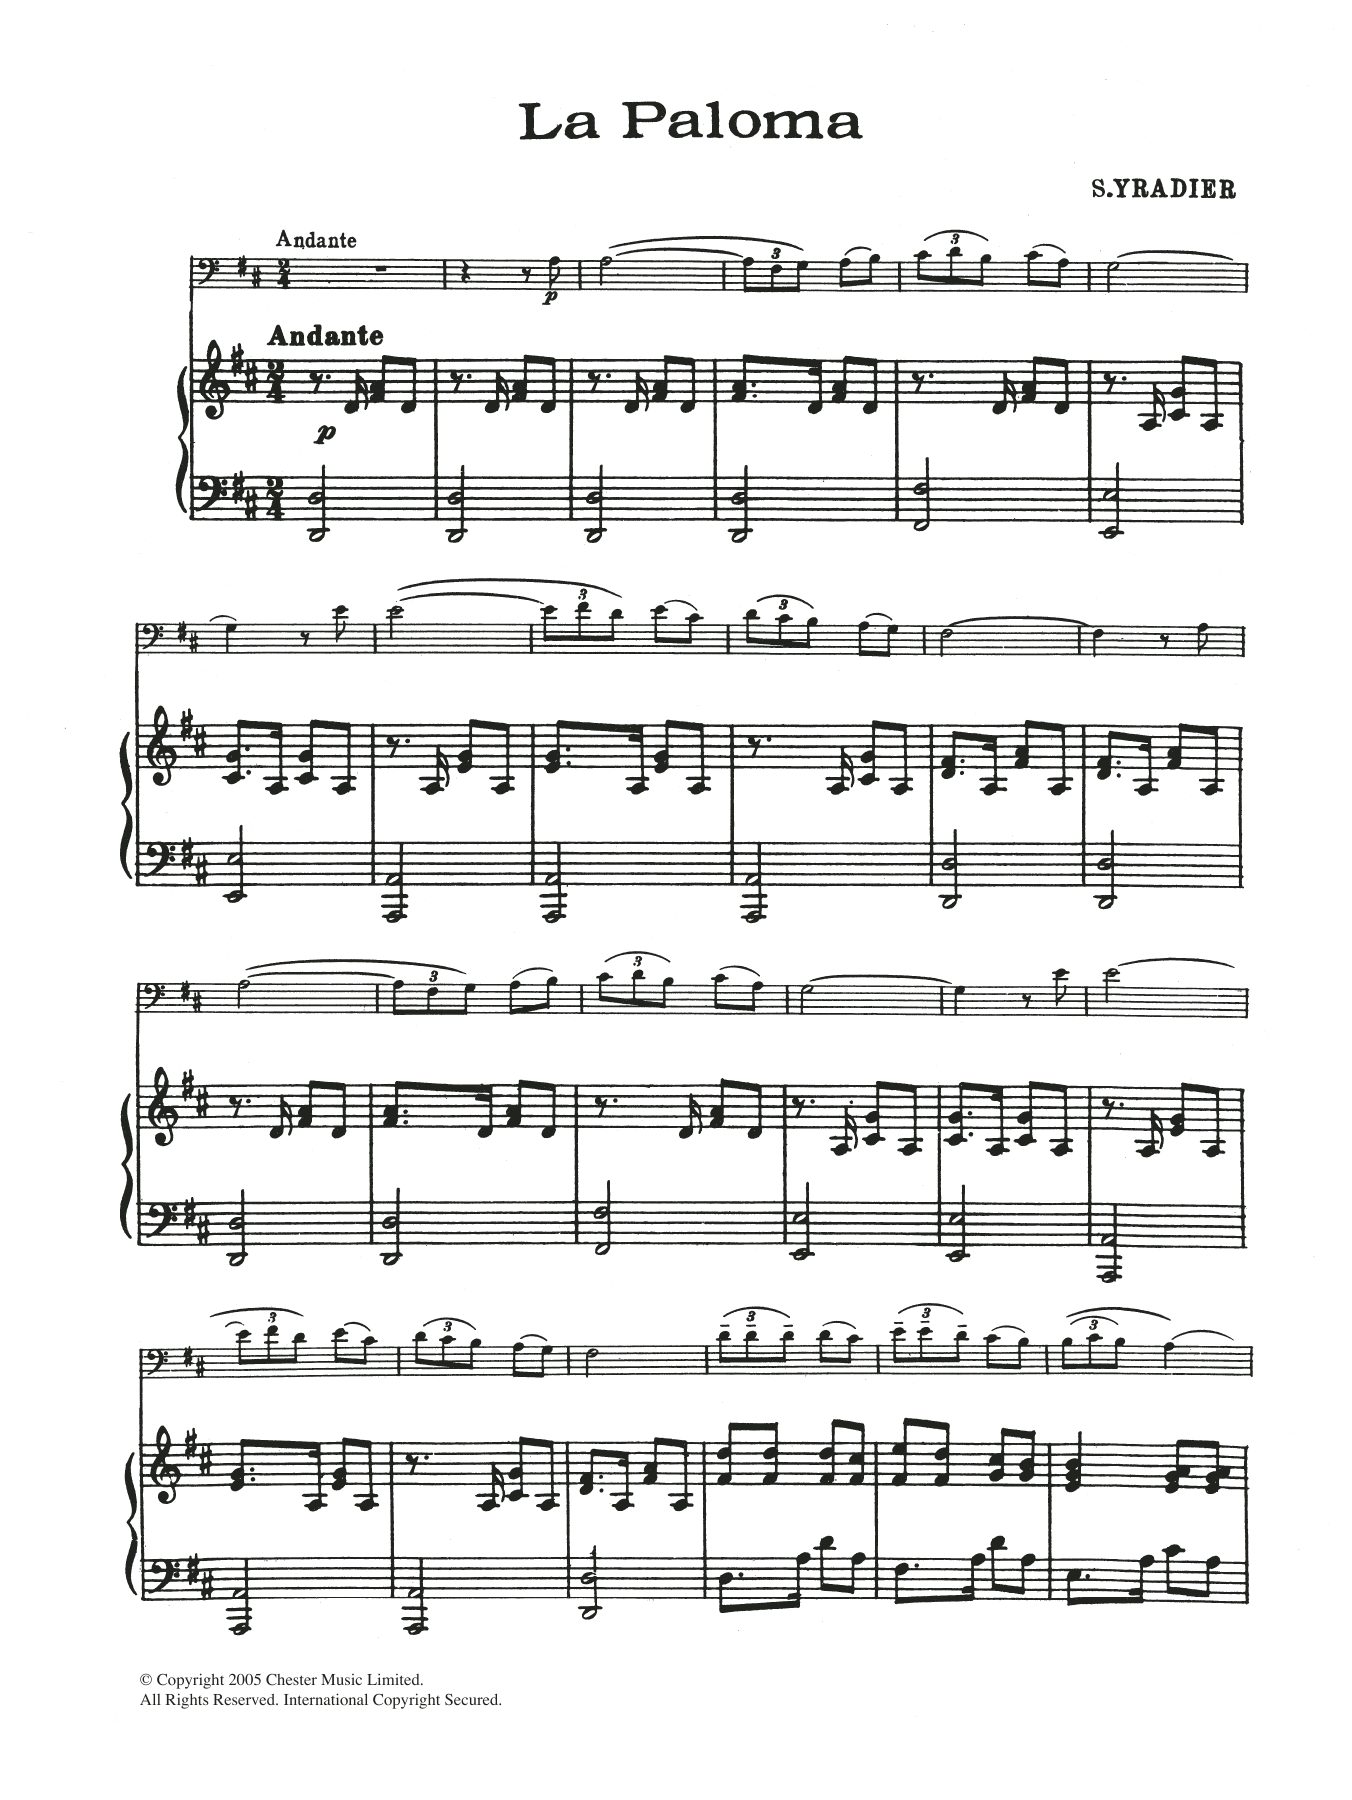 Sebastian Yradier La Paloma Sheet Music Notes & Chords for Cello - Download or Print PDF